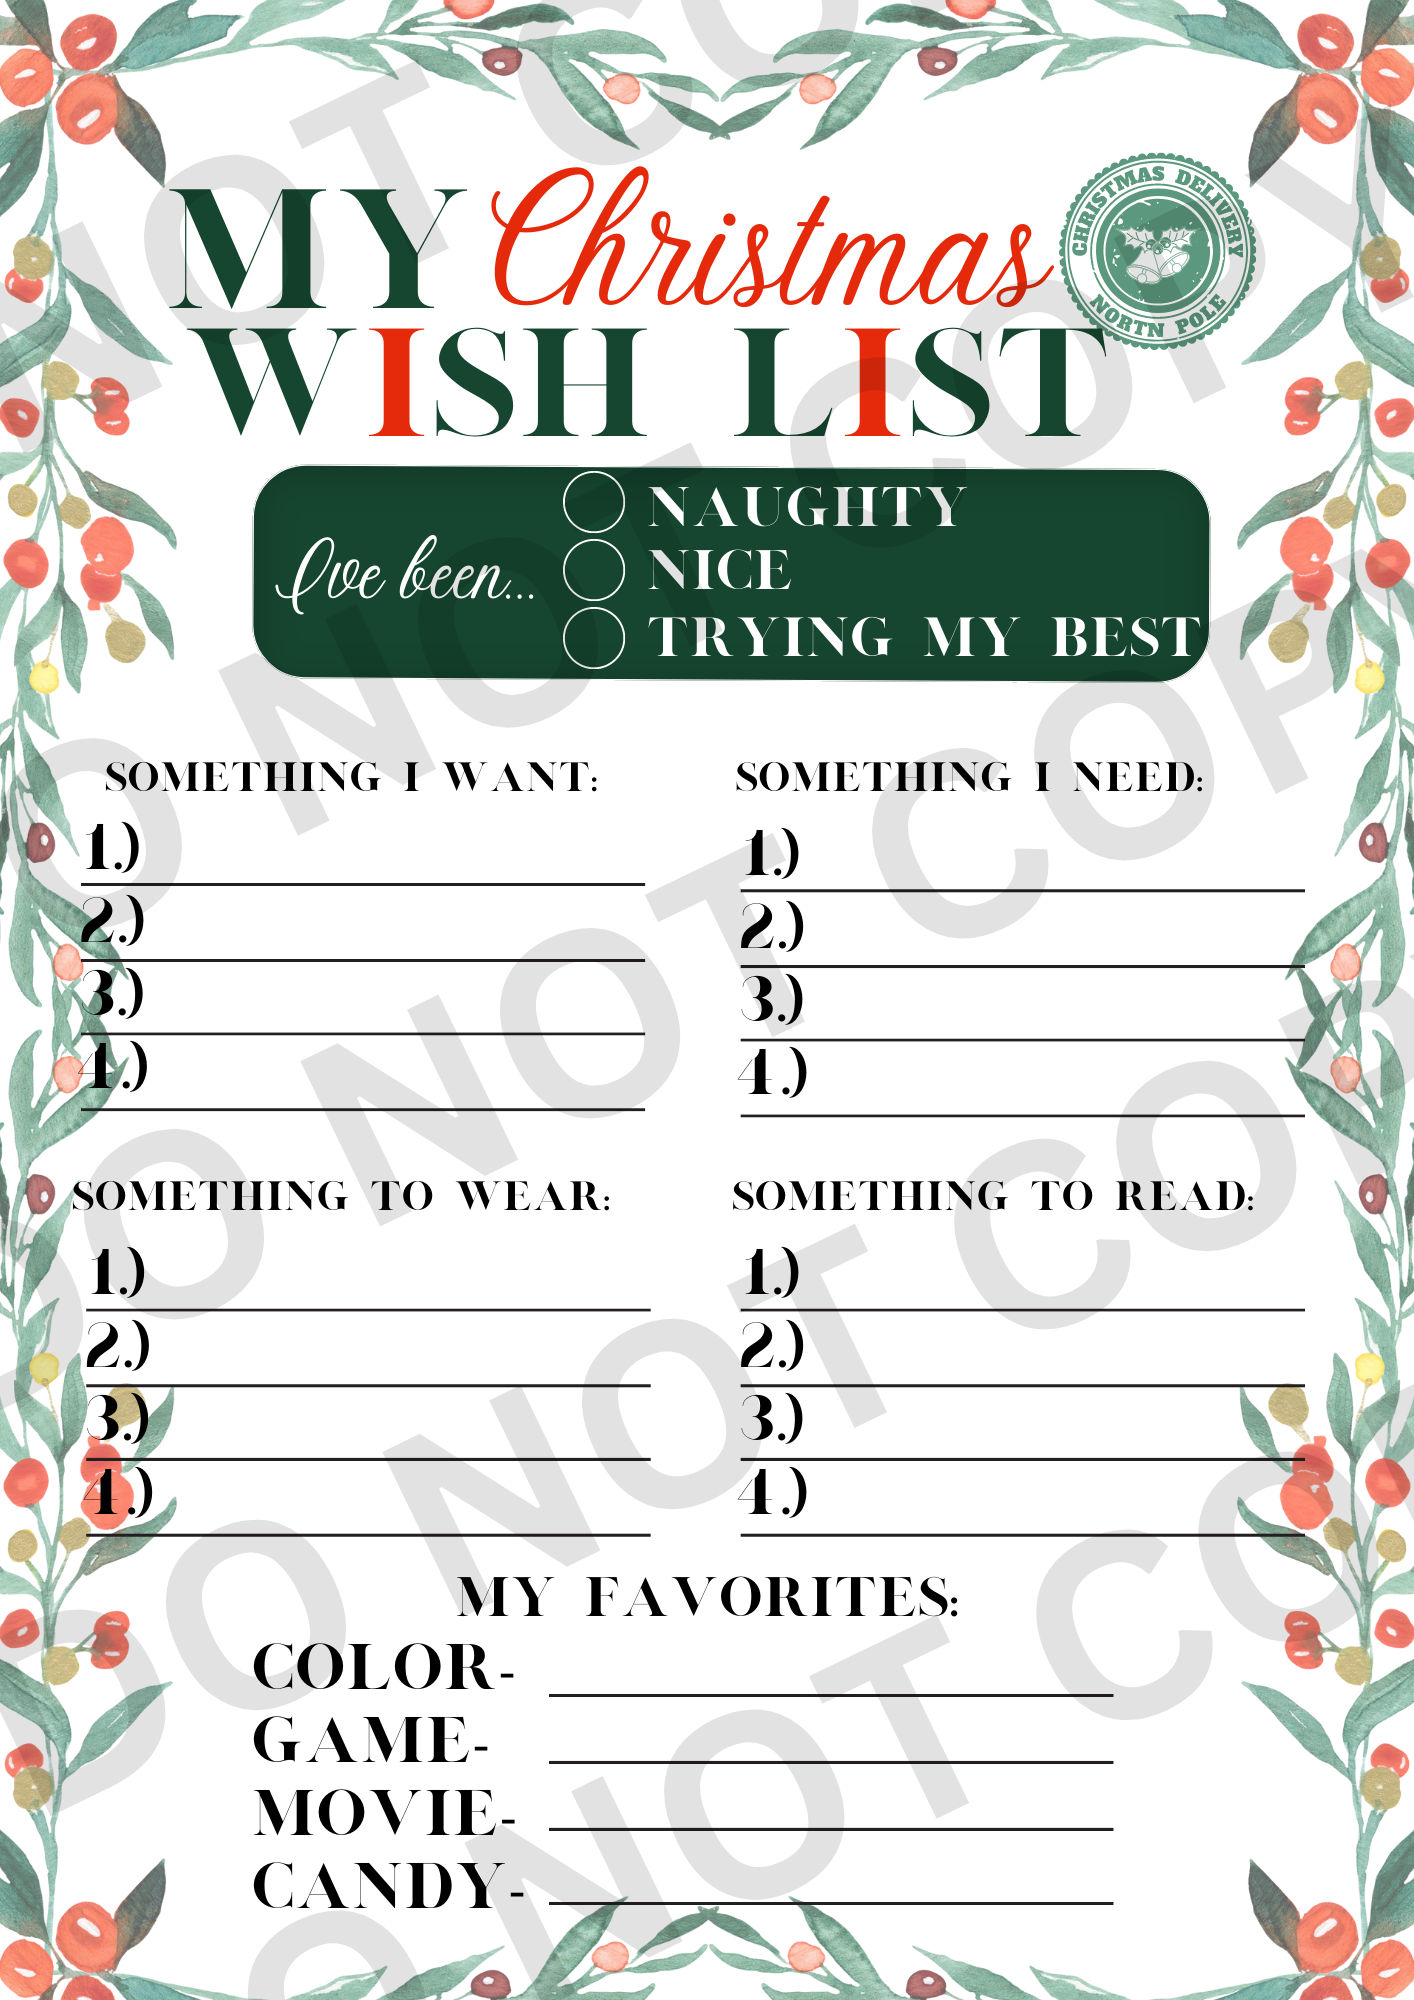 My Christmas Wishlist - Digital Download